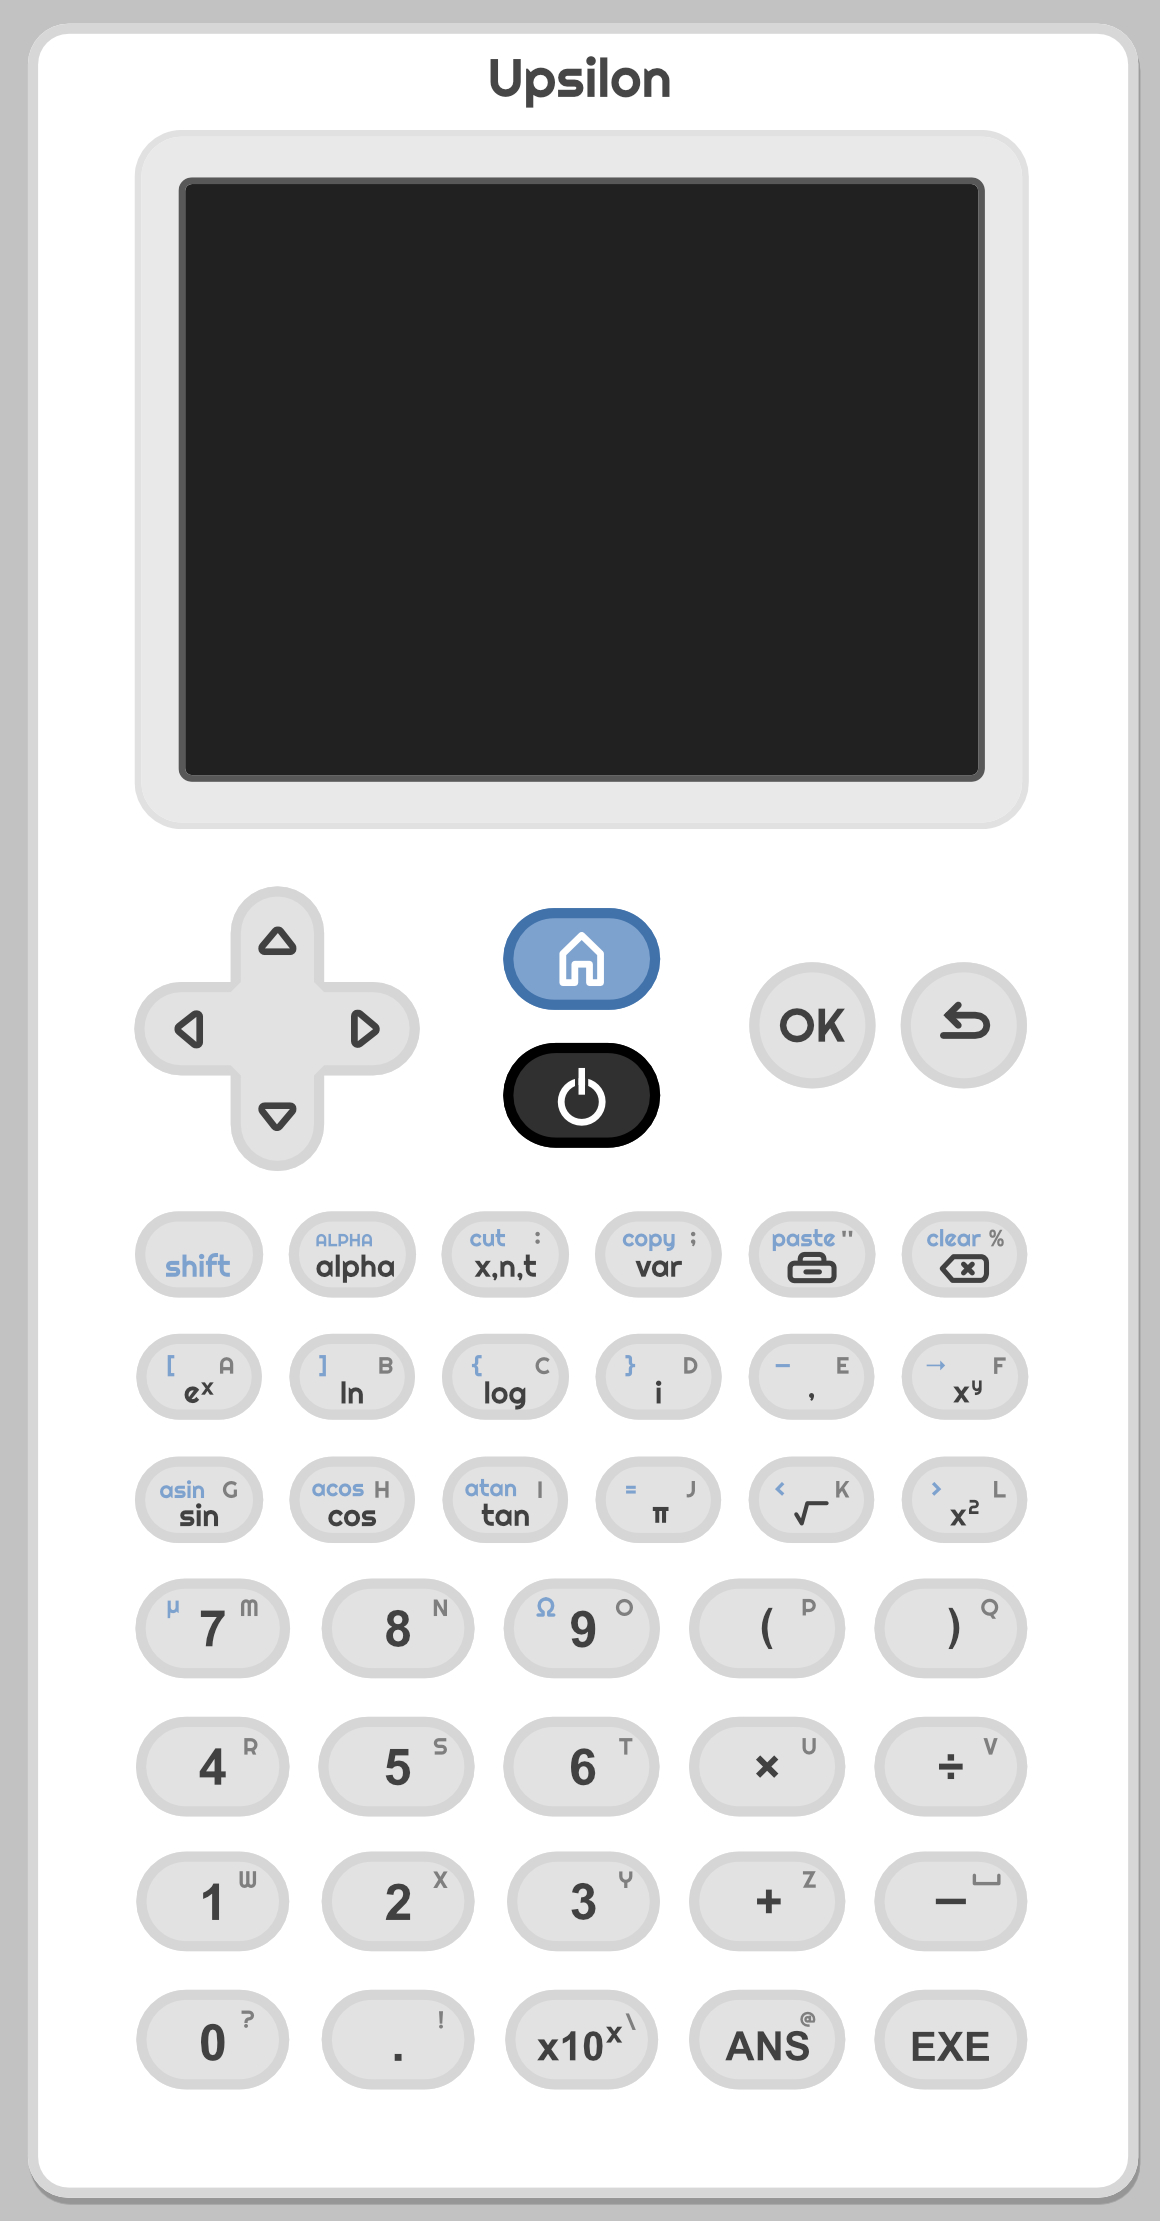 NumWorks Calculator